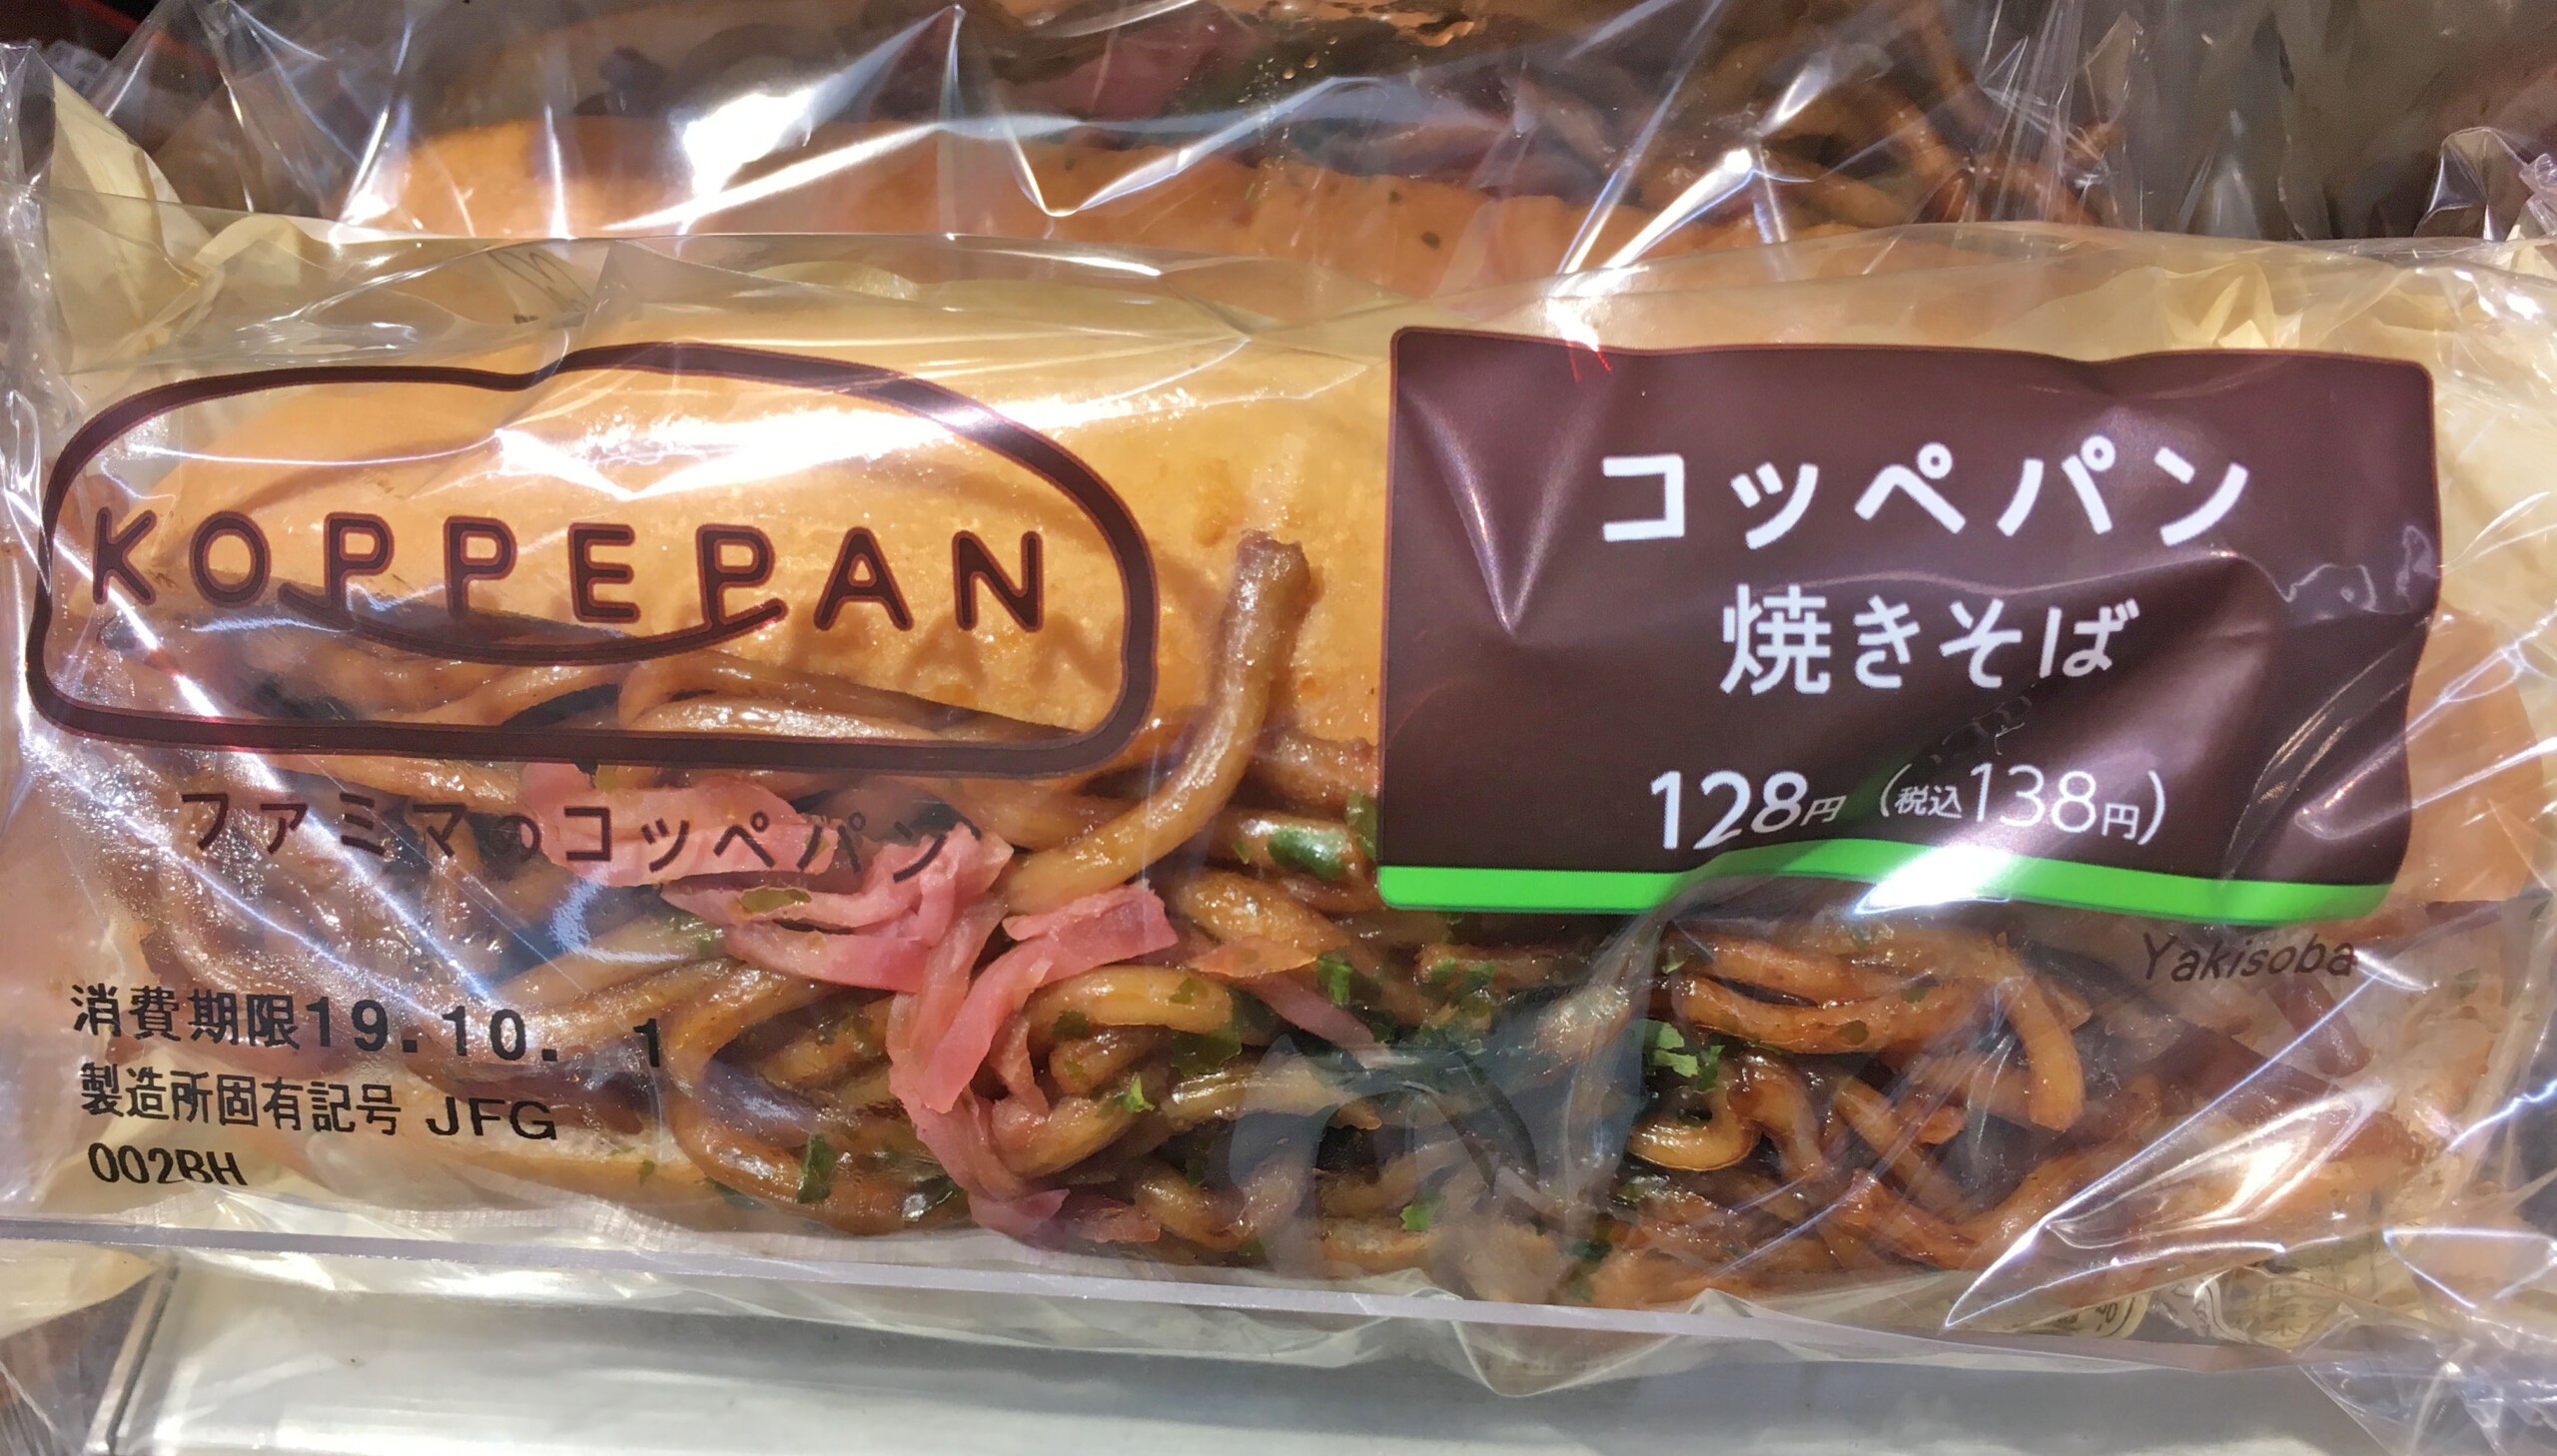 Koppe pan (hot dog bun) stuffed with yakisoba, Japan